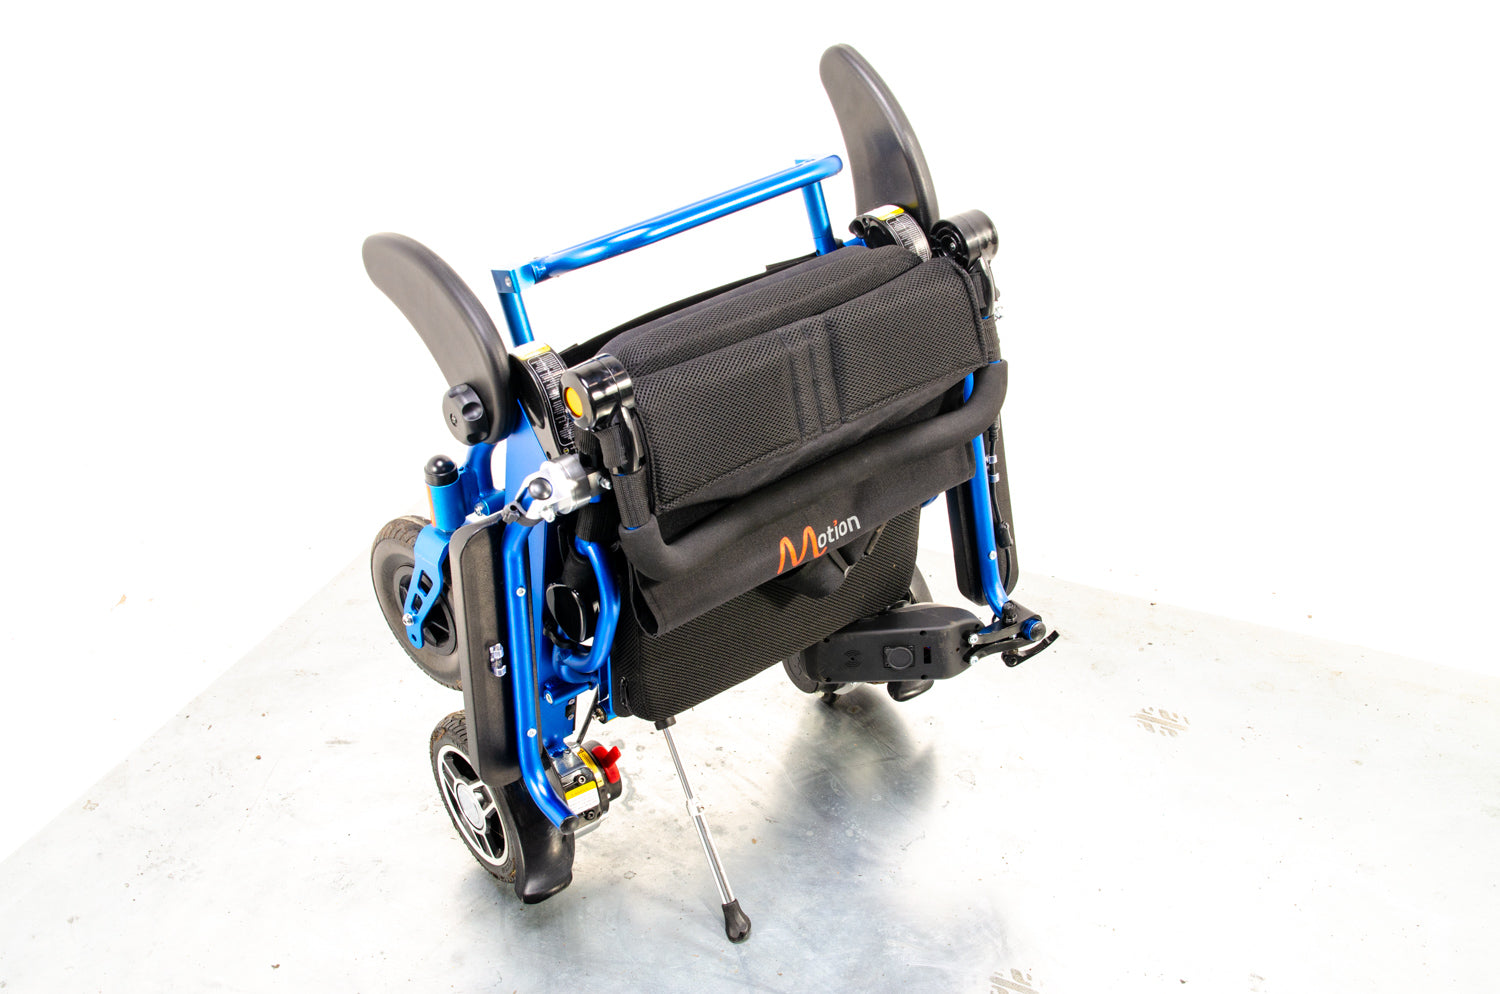 Foldalite Used Electric Wheelchair Lightweight Lithium Folding Travel Powerchair Motion Healthcare